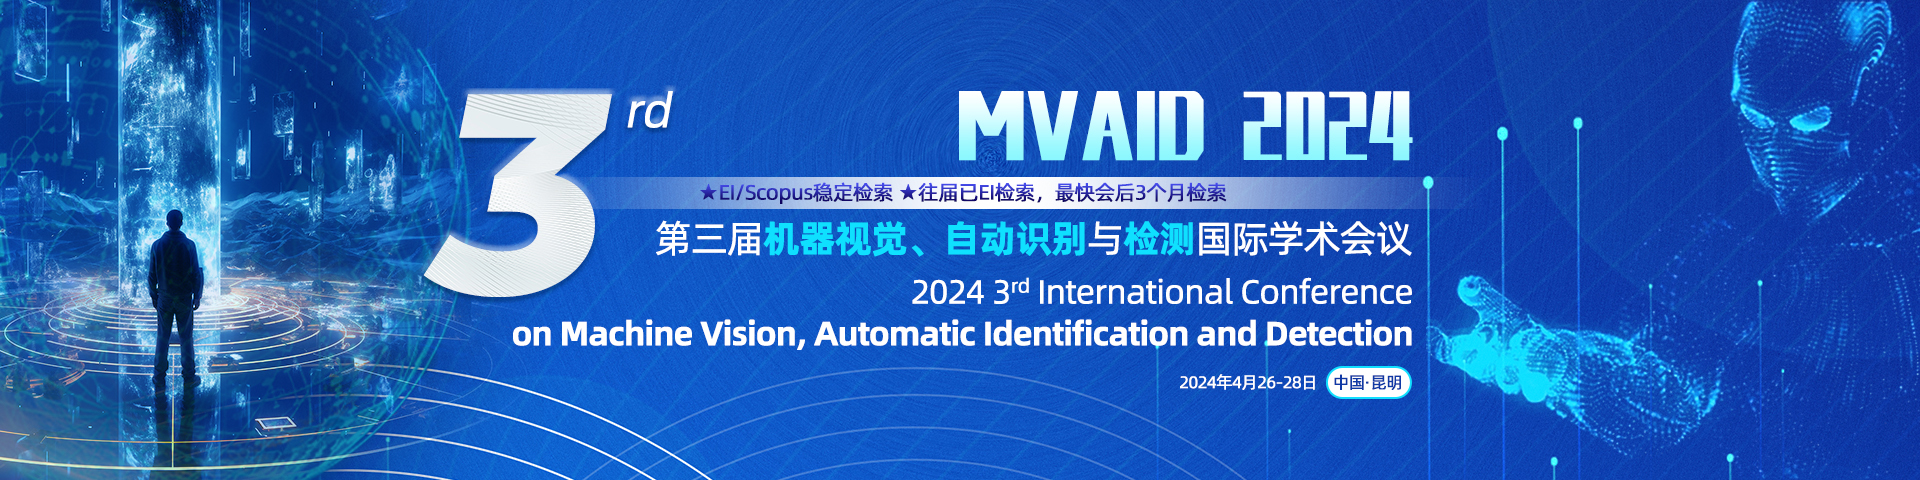 MVAID 2024 艾思平台.jpg